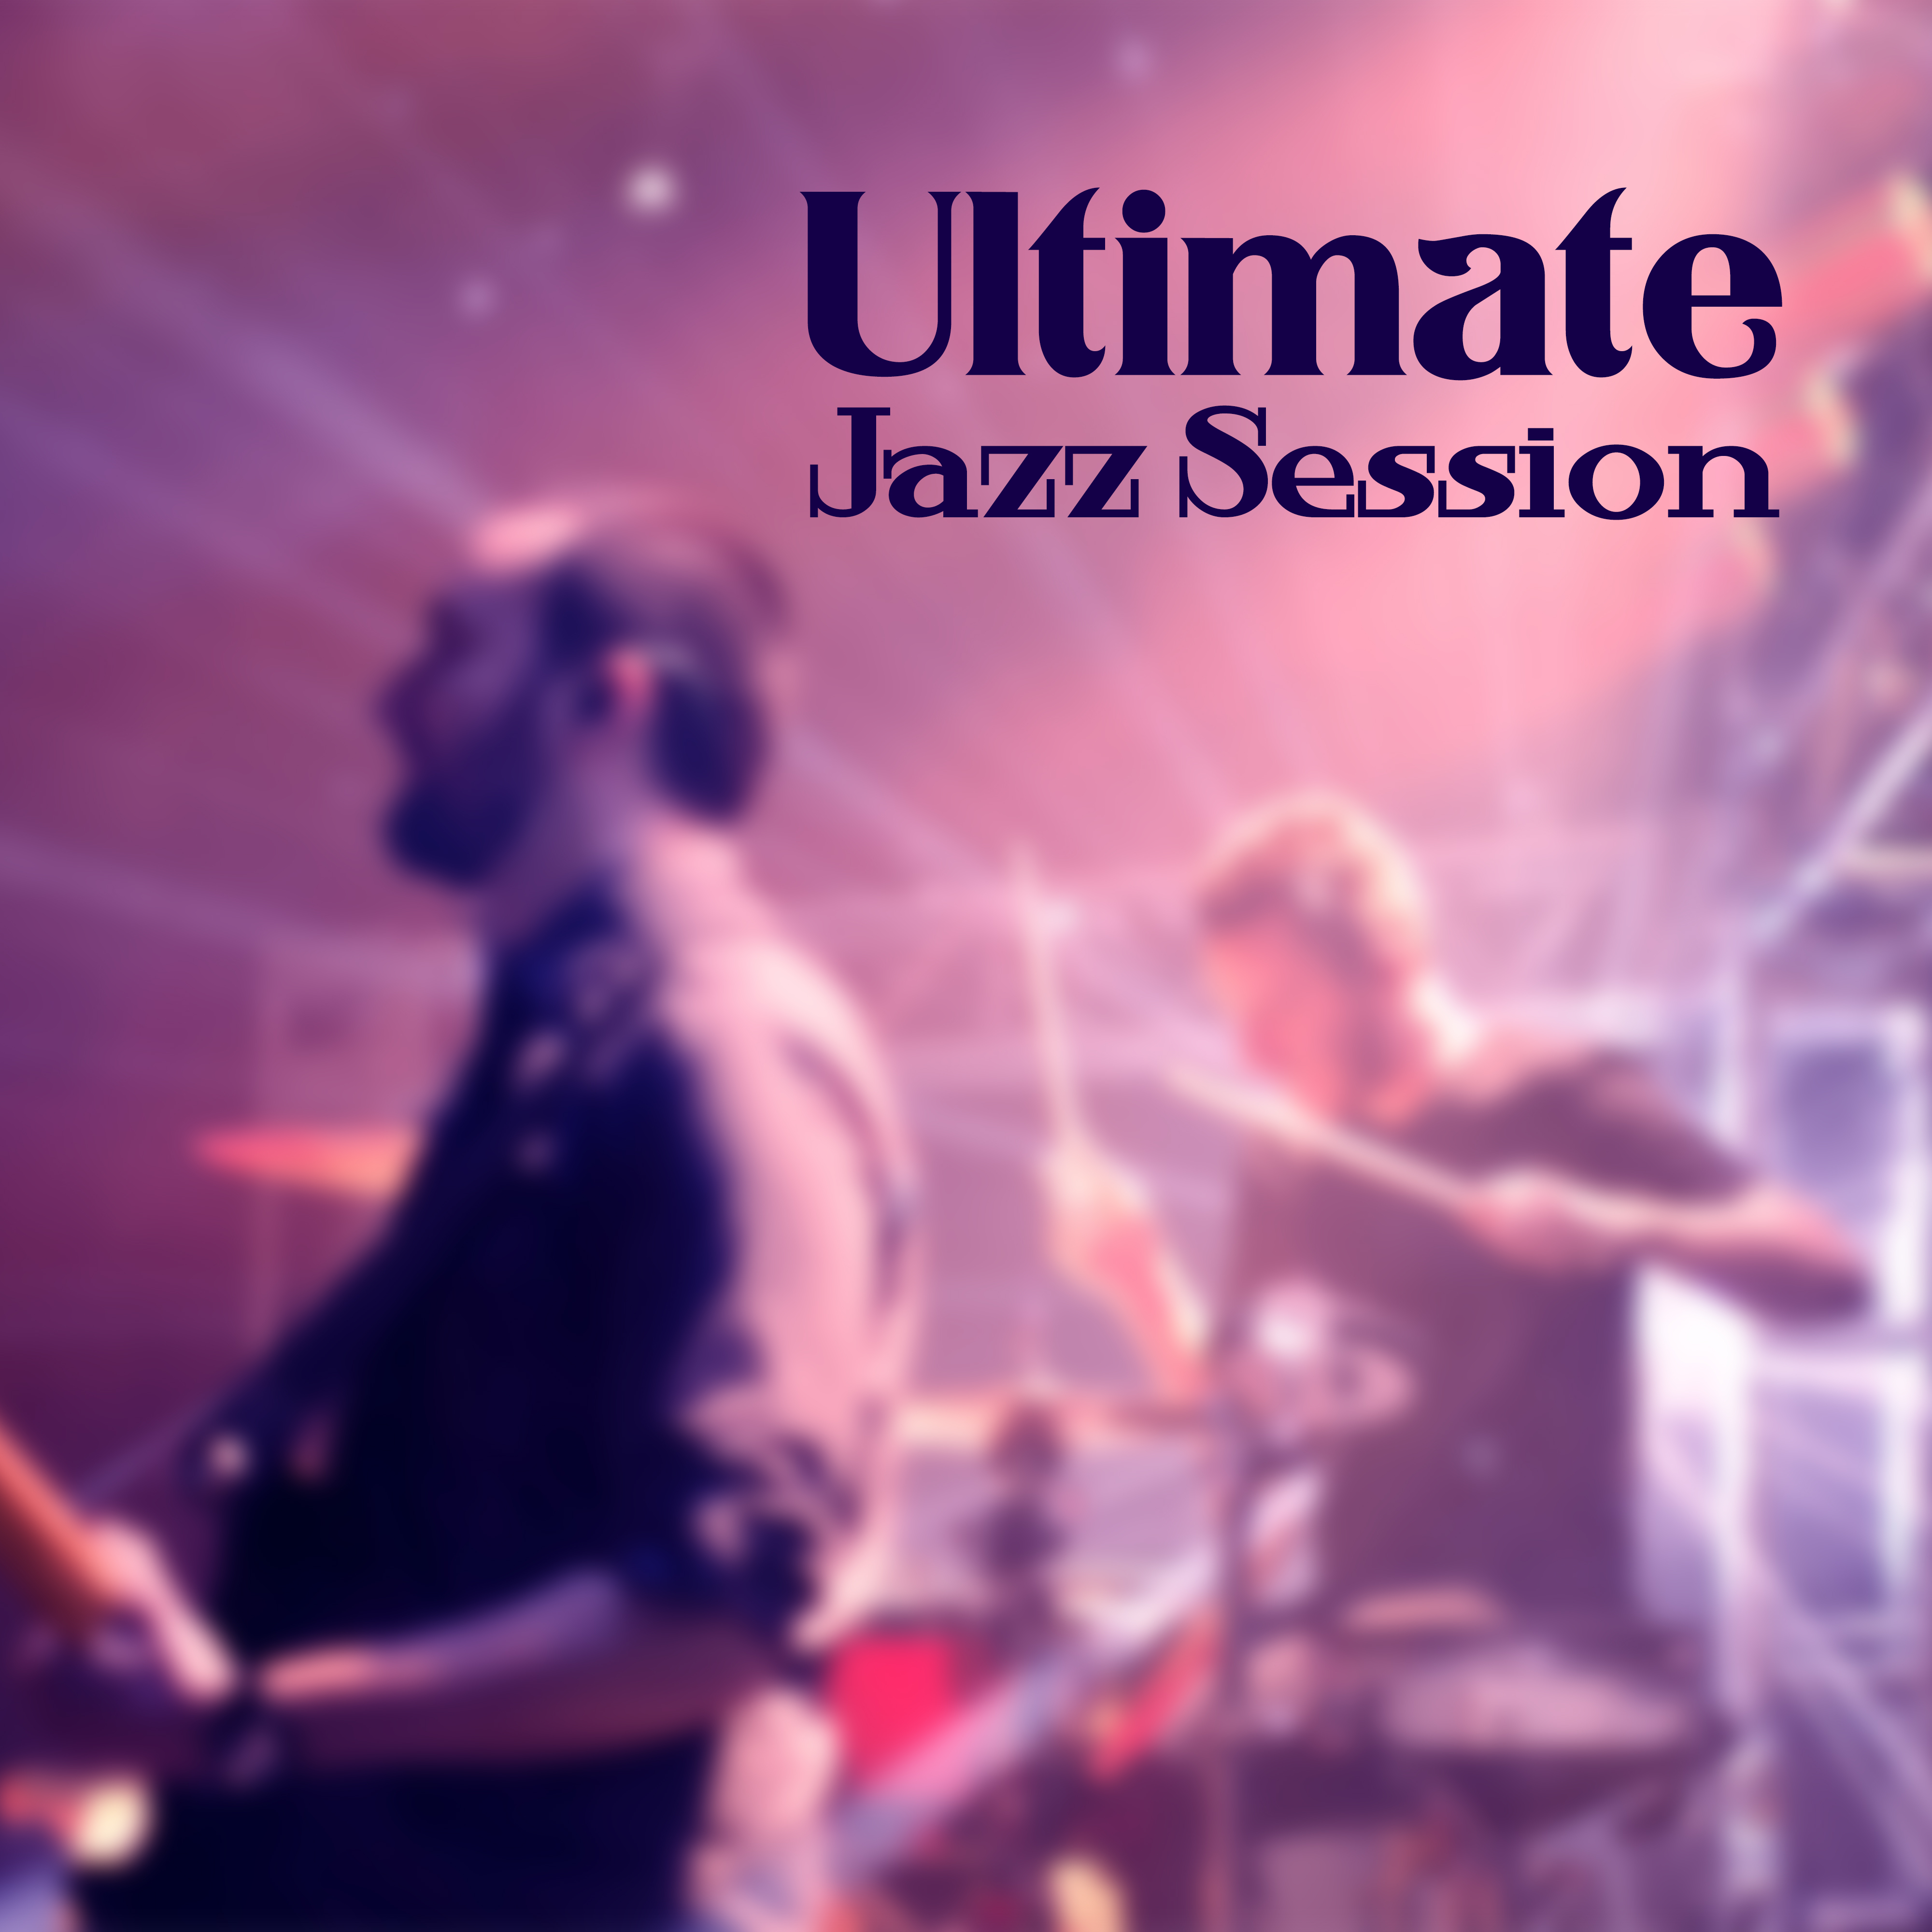 Ultimate Jazz Session – Long Evening, Jazz Session, Gold Jazz, Piano Bar, Friday Night